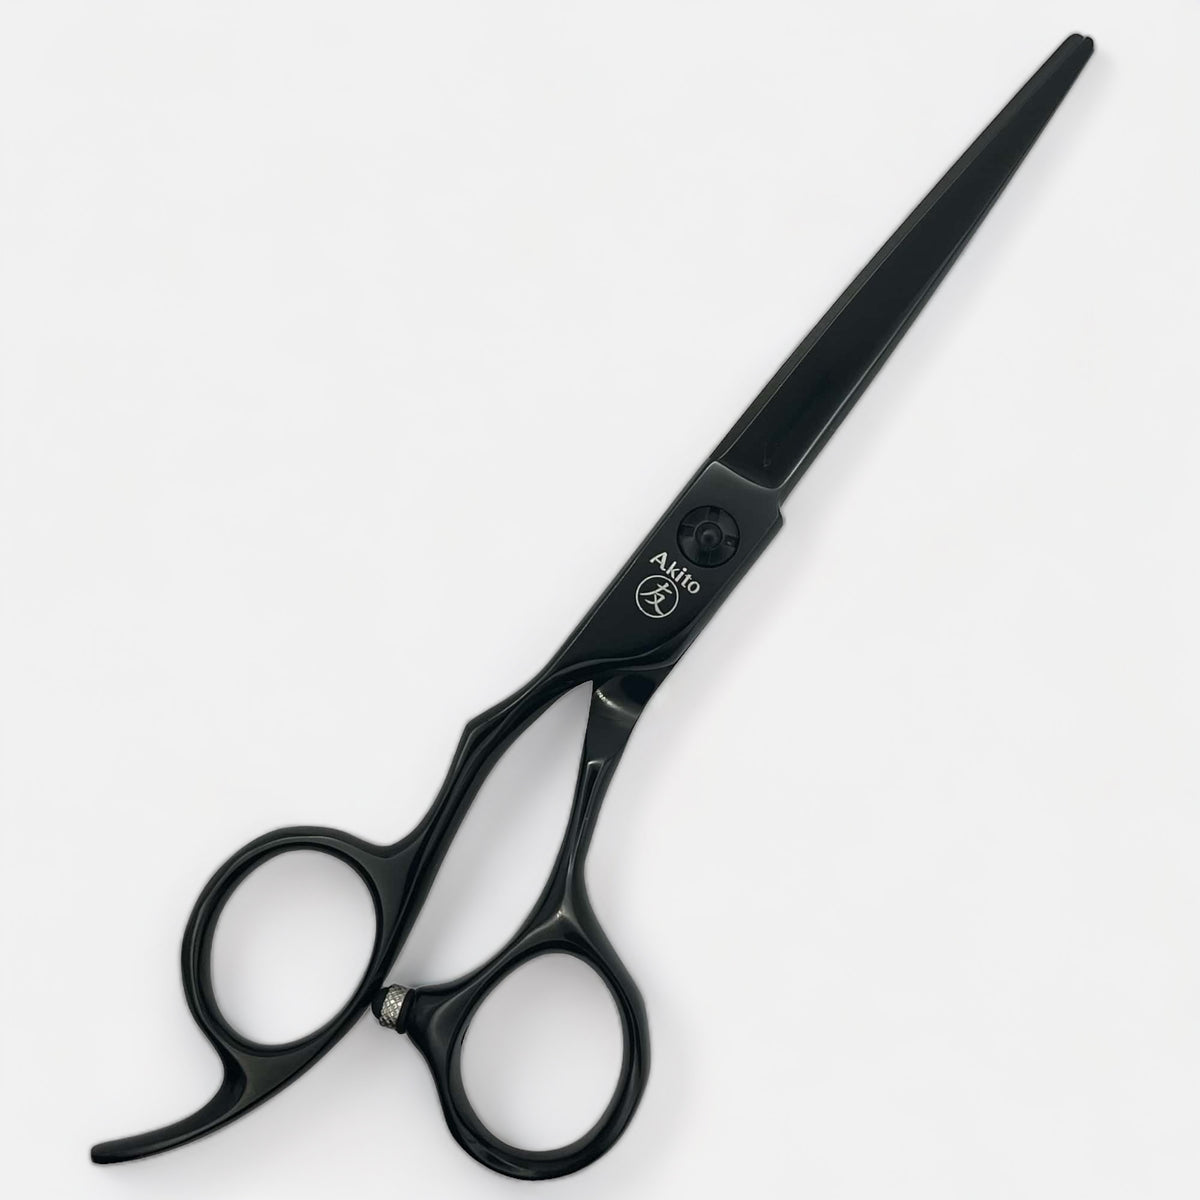 F-2 Left Handed Hairdressing Scissors Black side angle